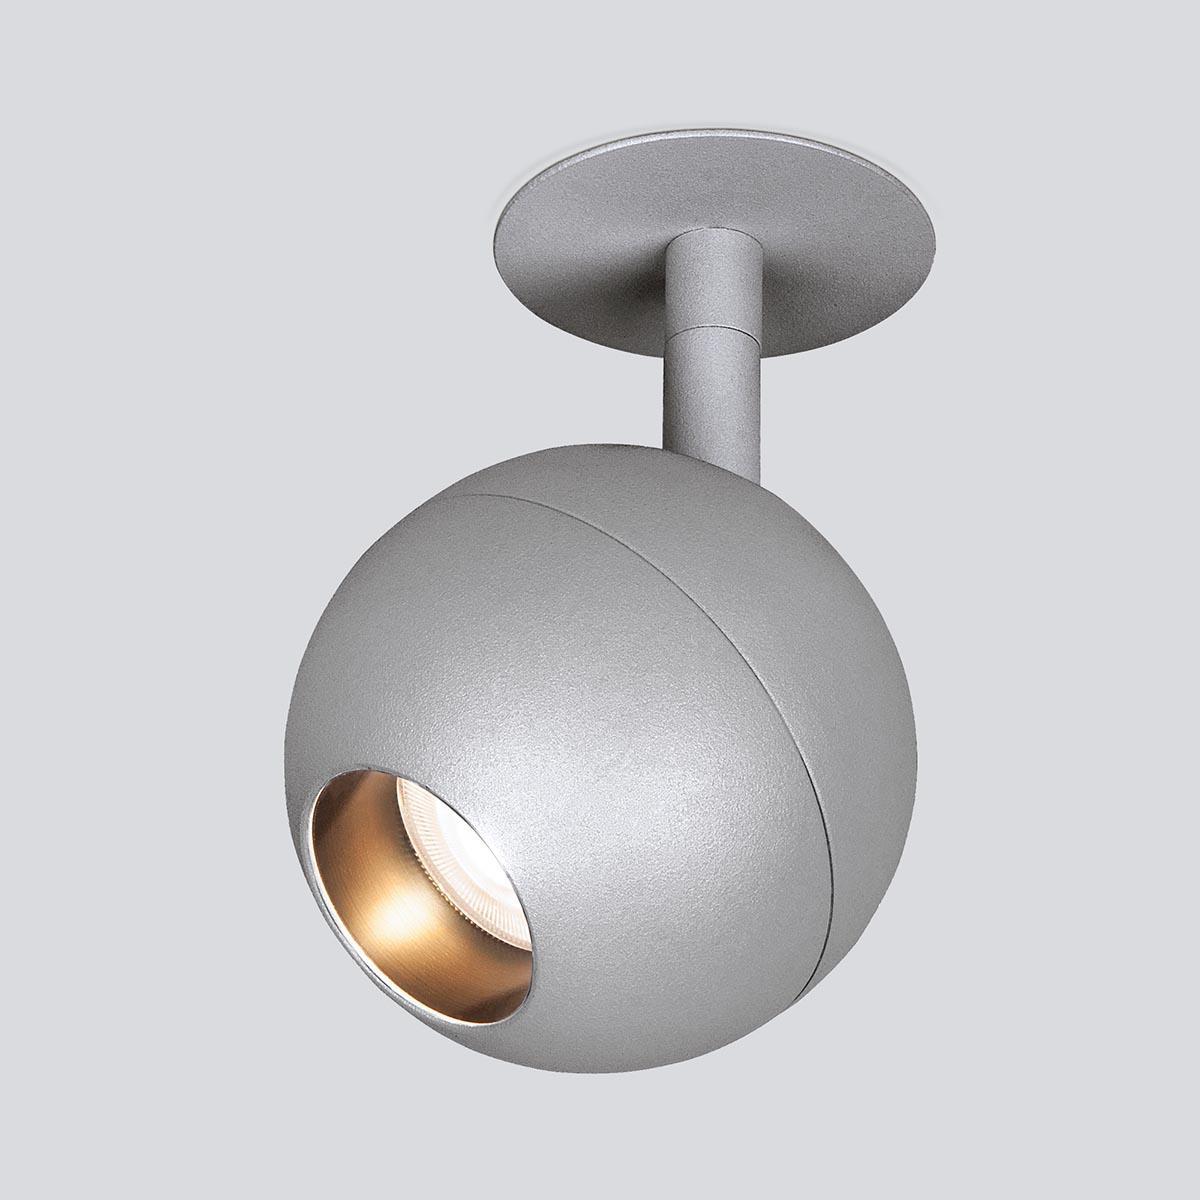 Встраиваемый светодиодный спот Elektrostandard Ball 9925 LED 8W 4200K серебро 4690389169816 luxe ball ваза